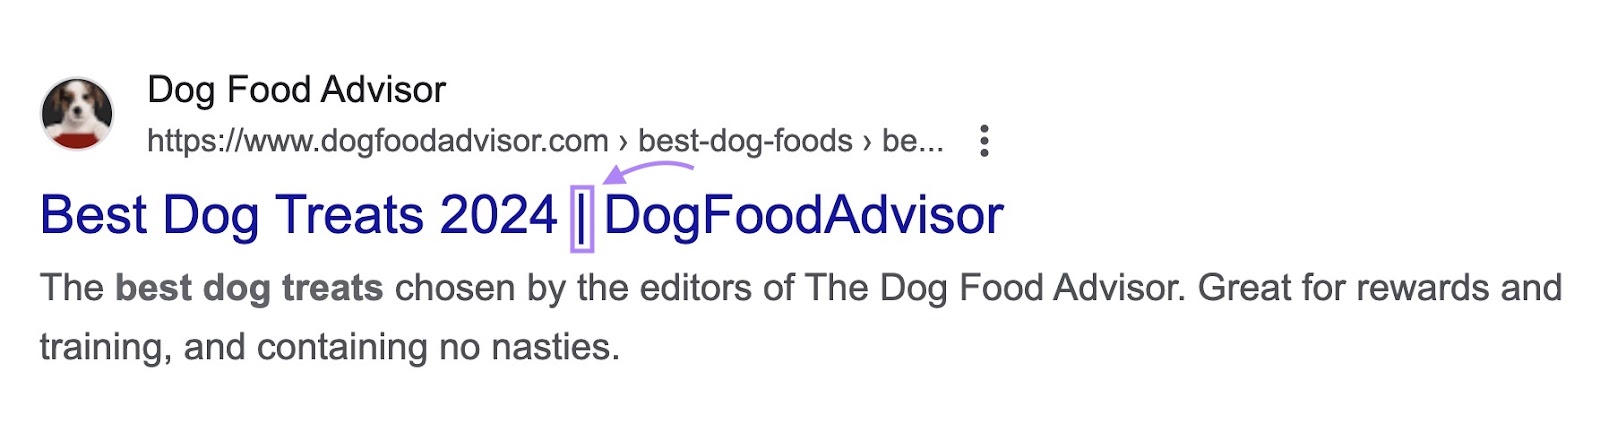 Title on SERP that reads: "Best  Treats 2024 | DogFoodAdvisor"